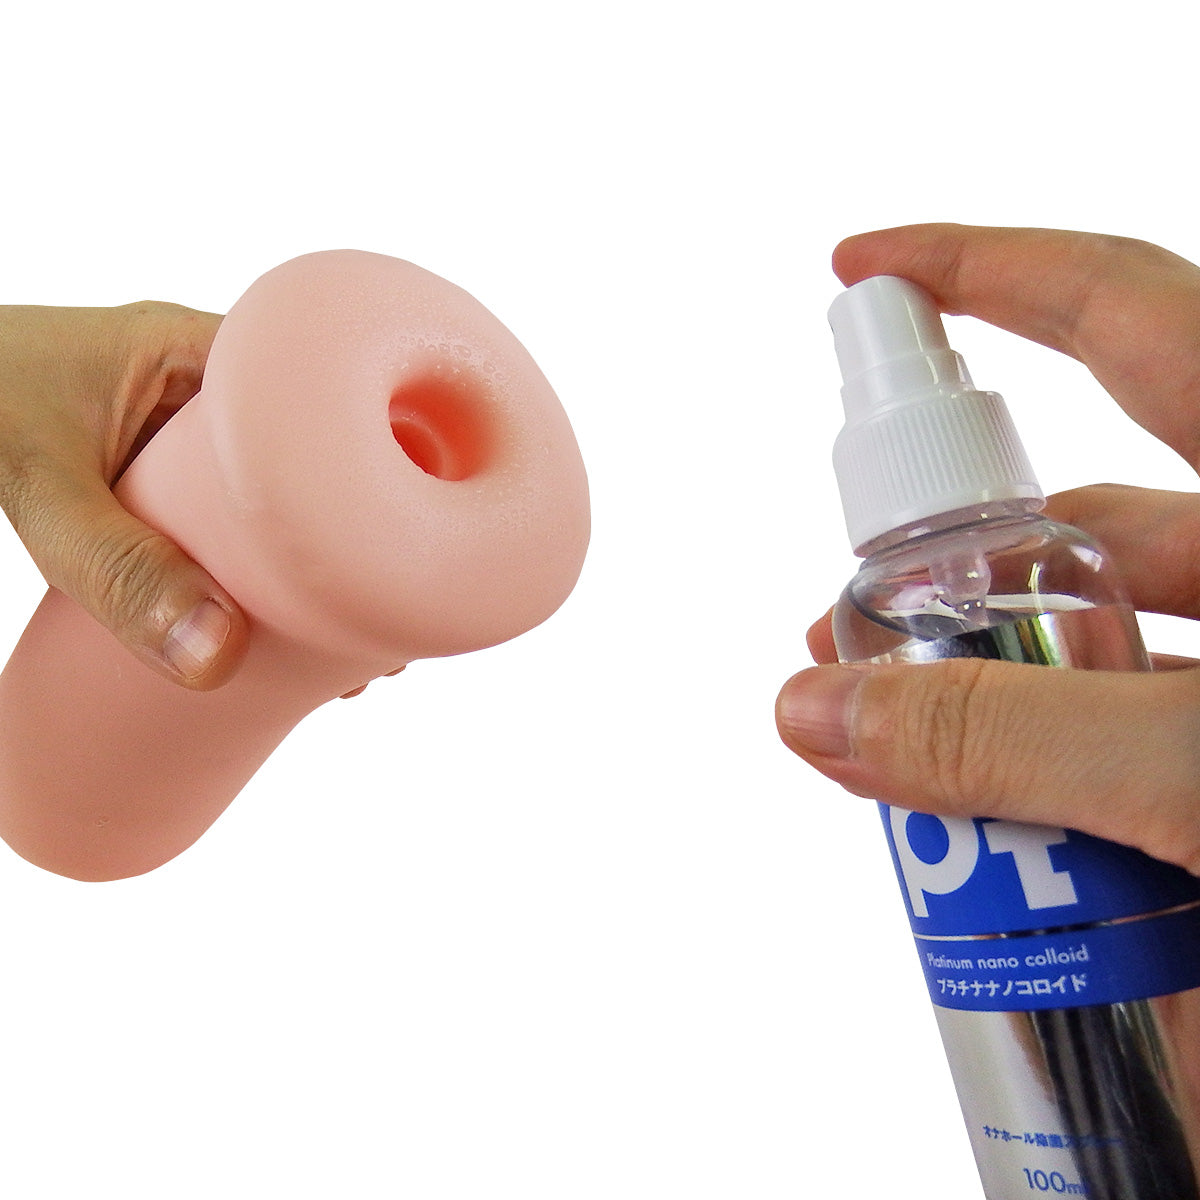 SSI JAPAN Pt 抗菌消臭抗酸化玩具清潔保養噴霧 100ml